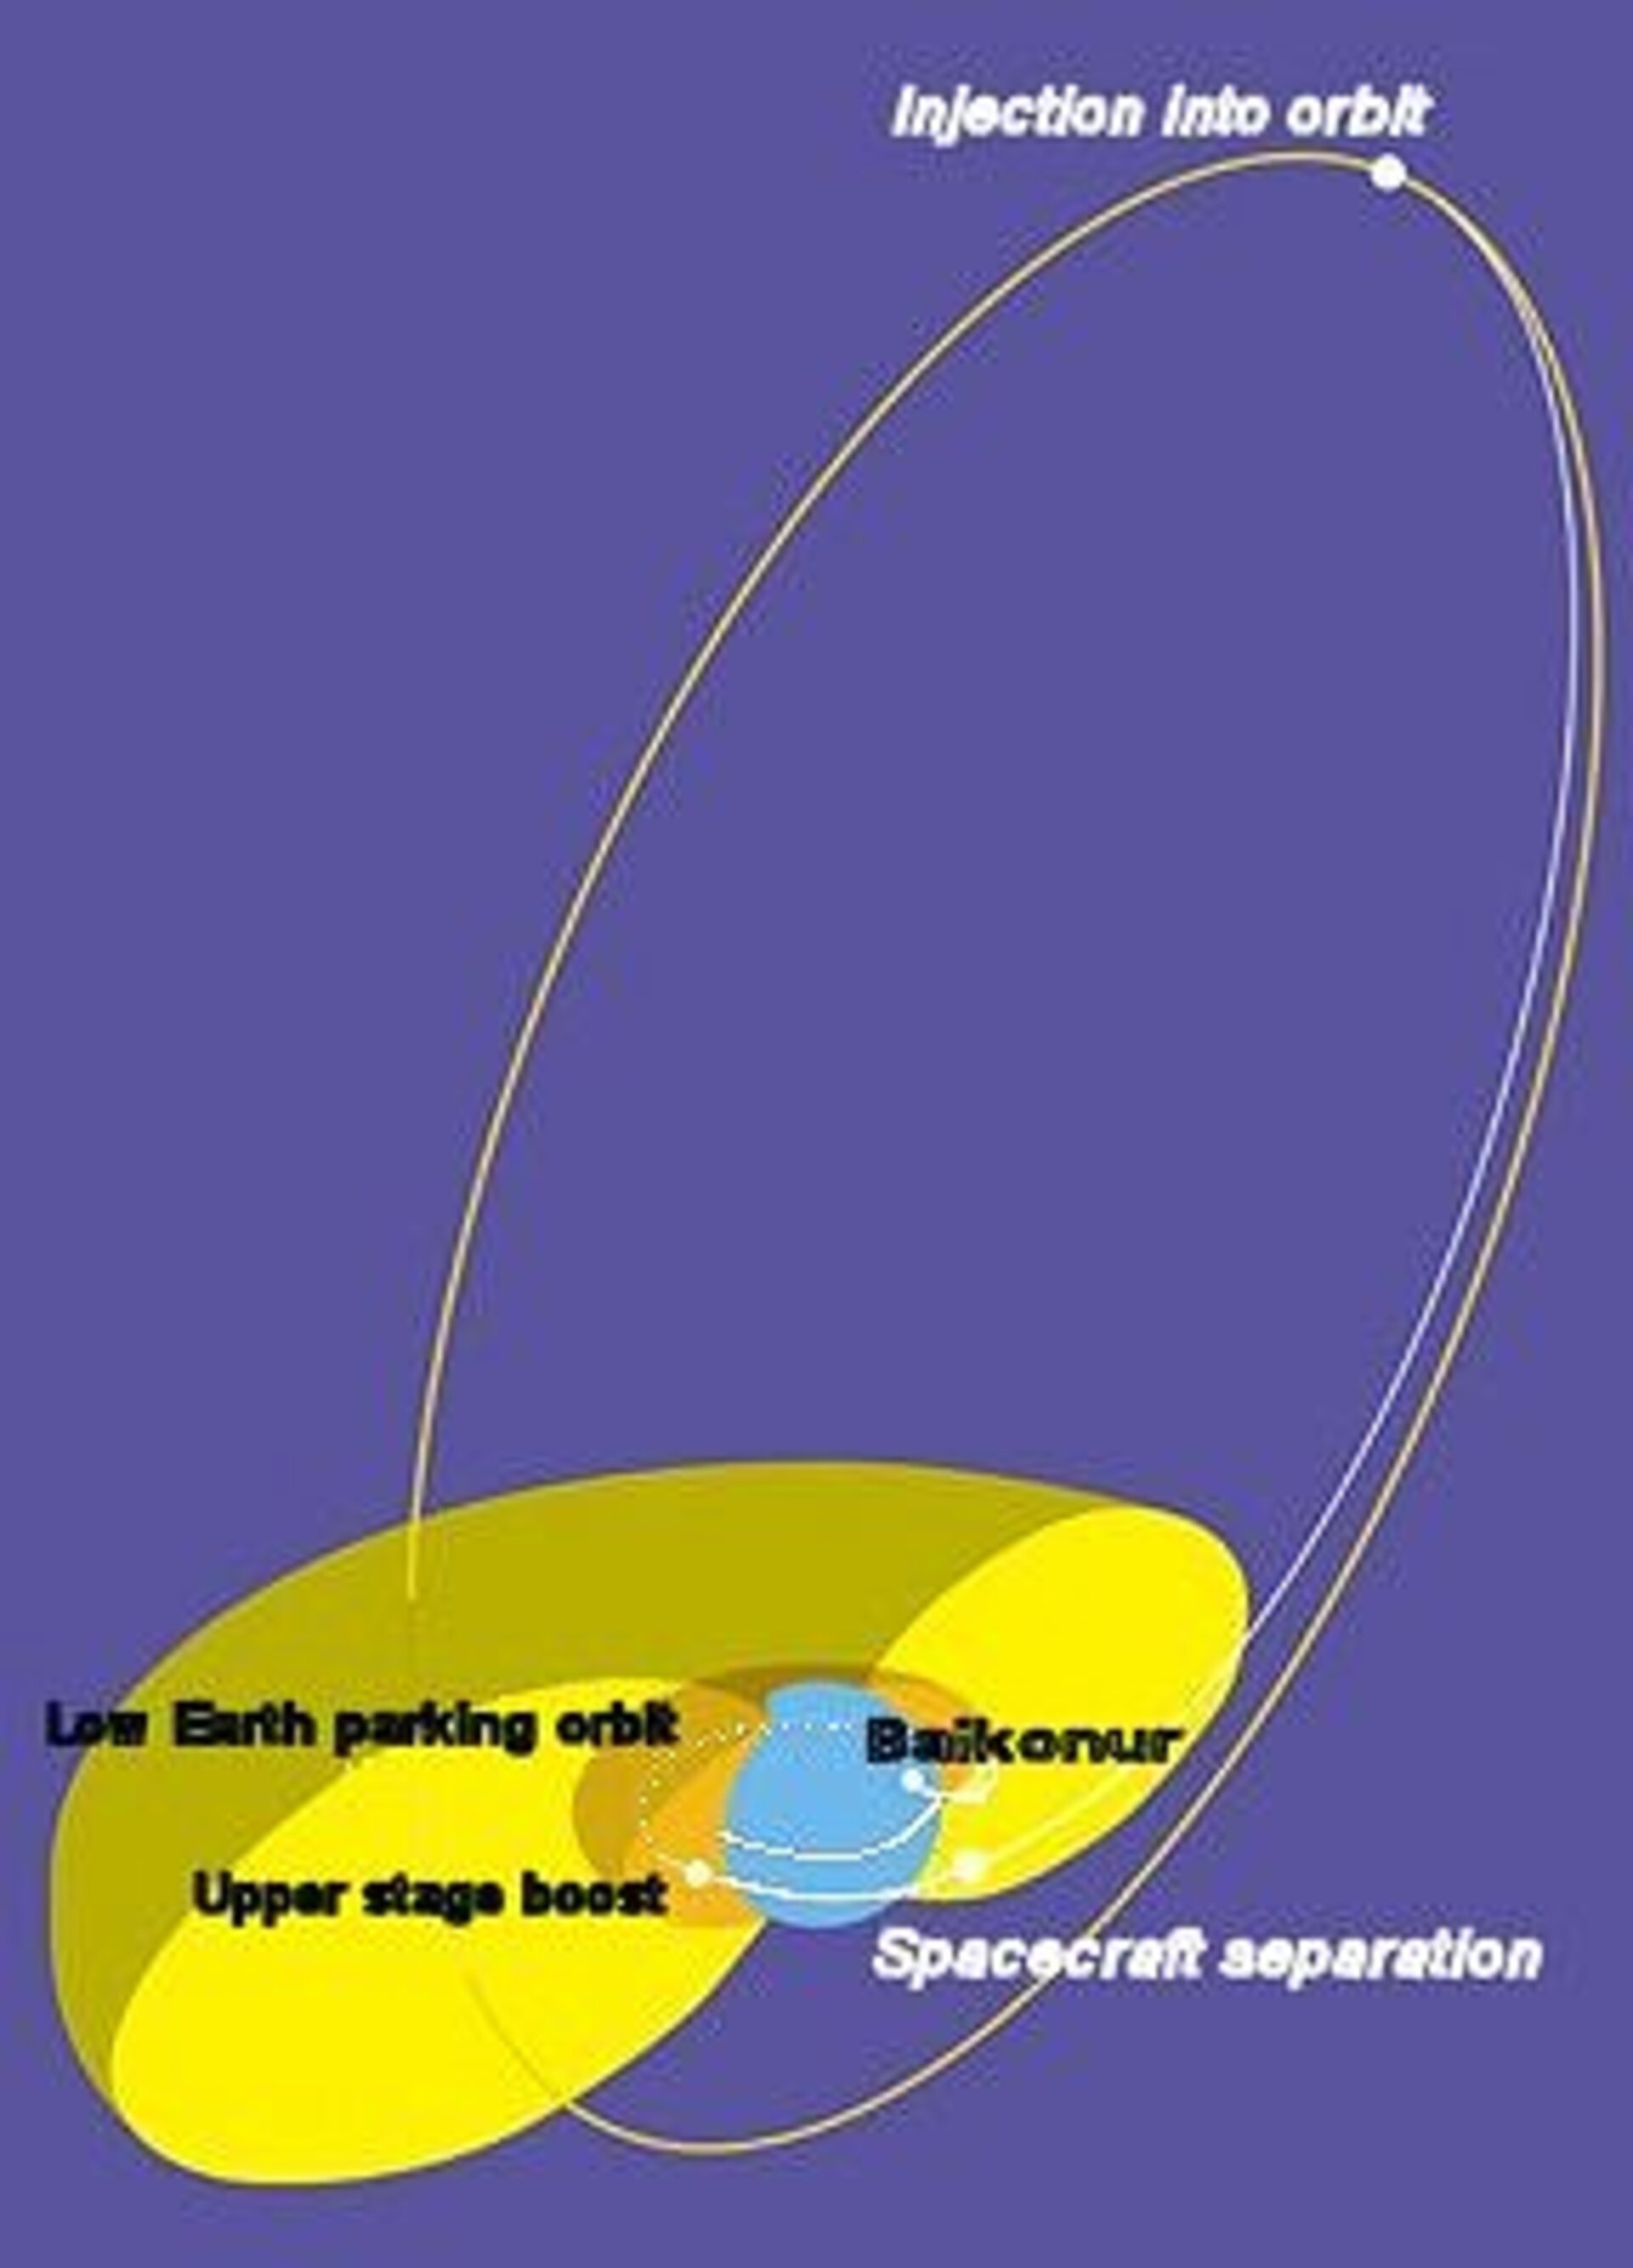 Integral's eccentric orbit